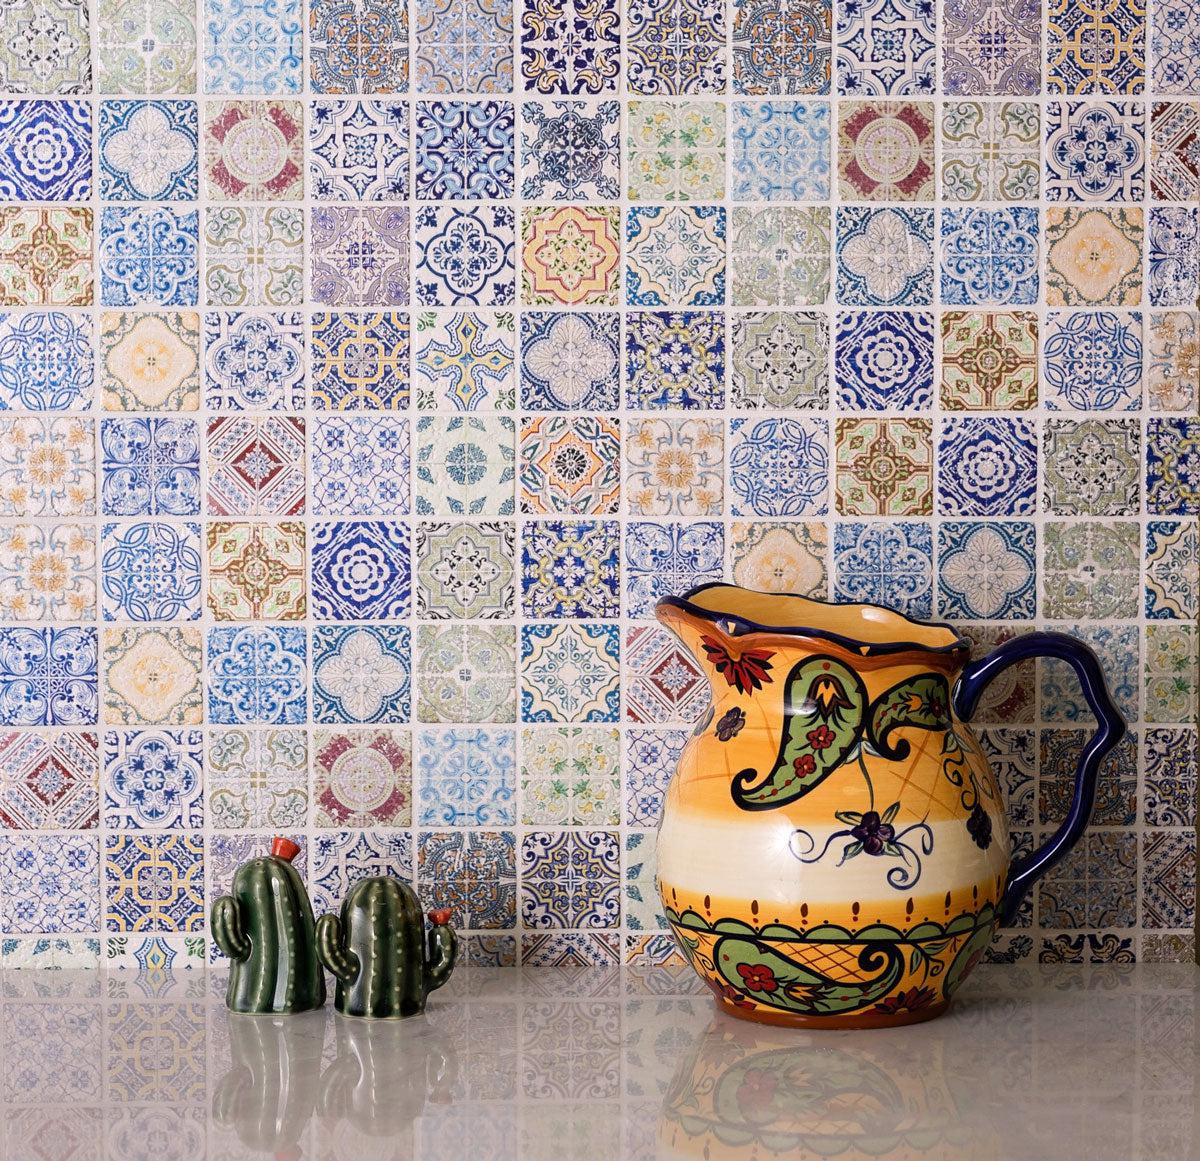 Spanish Siesta Mosaic Tile Kitchen Backsplash